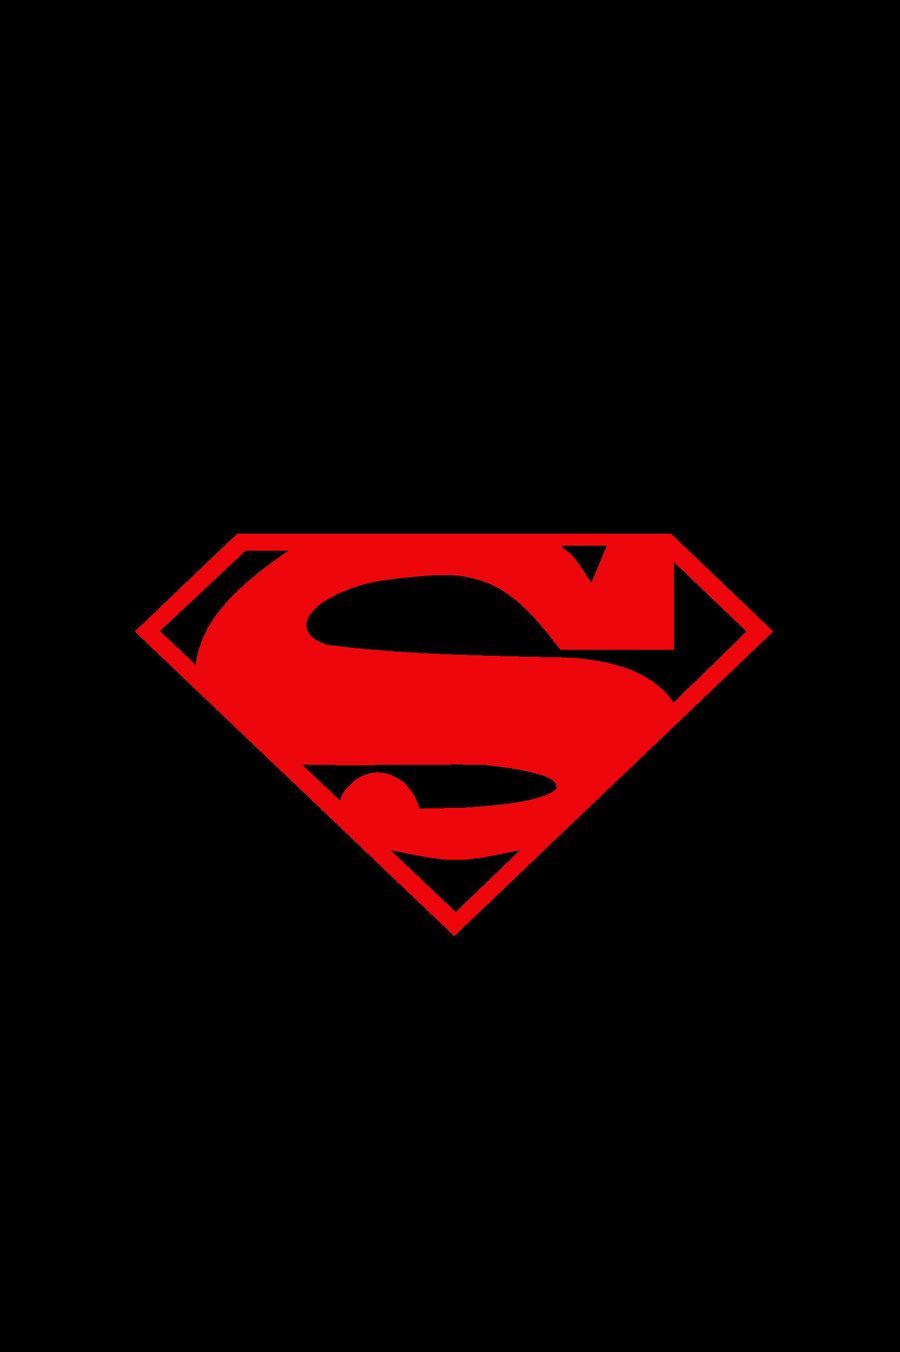 Superboy. Superman wallpaper, Superman comic, Superman wallpaper logo